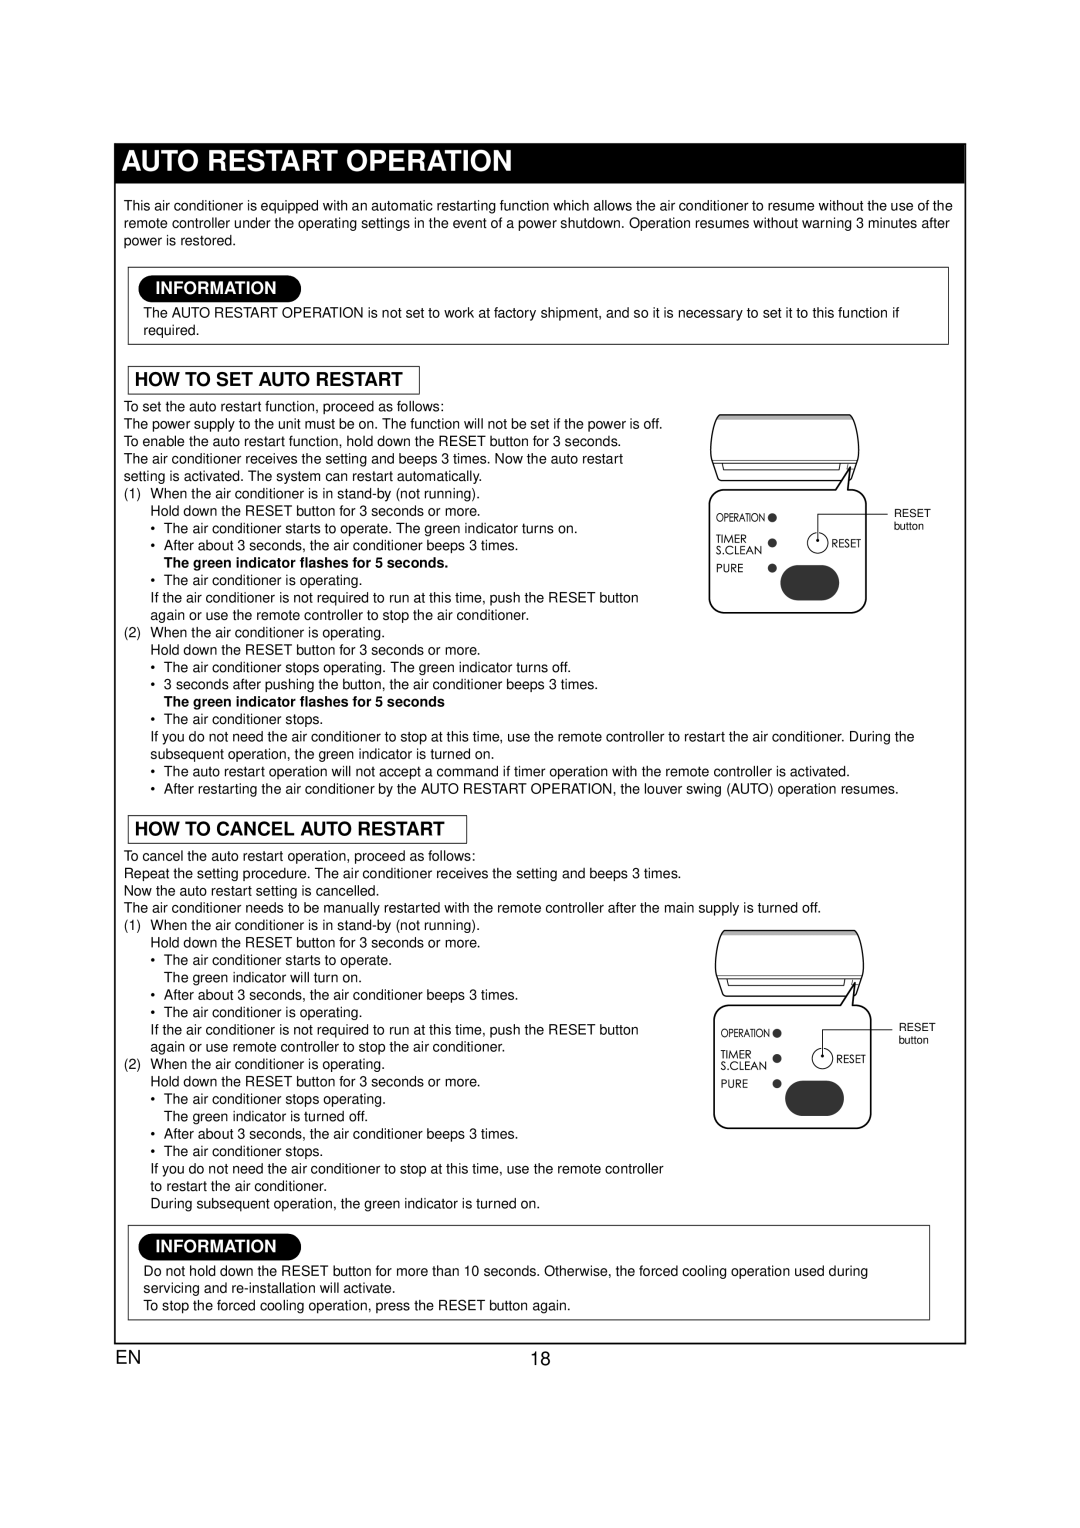 Toshiba RAS-07PKVP-E owner manual Auto Restart Operation, How To Set Auto Restart, How To Cancel Auto Restart, Information 